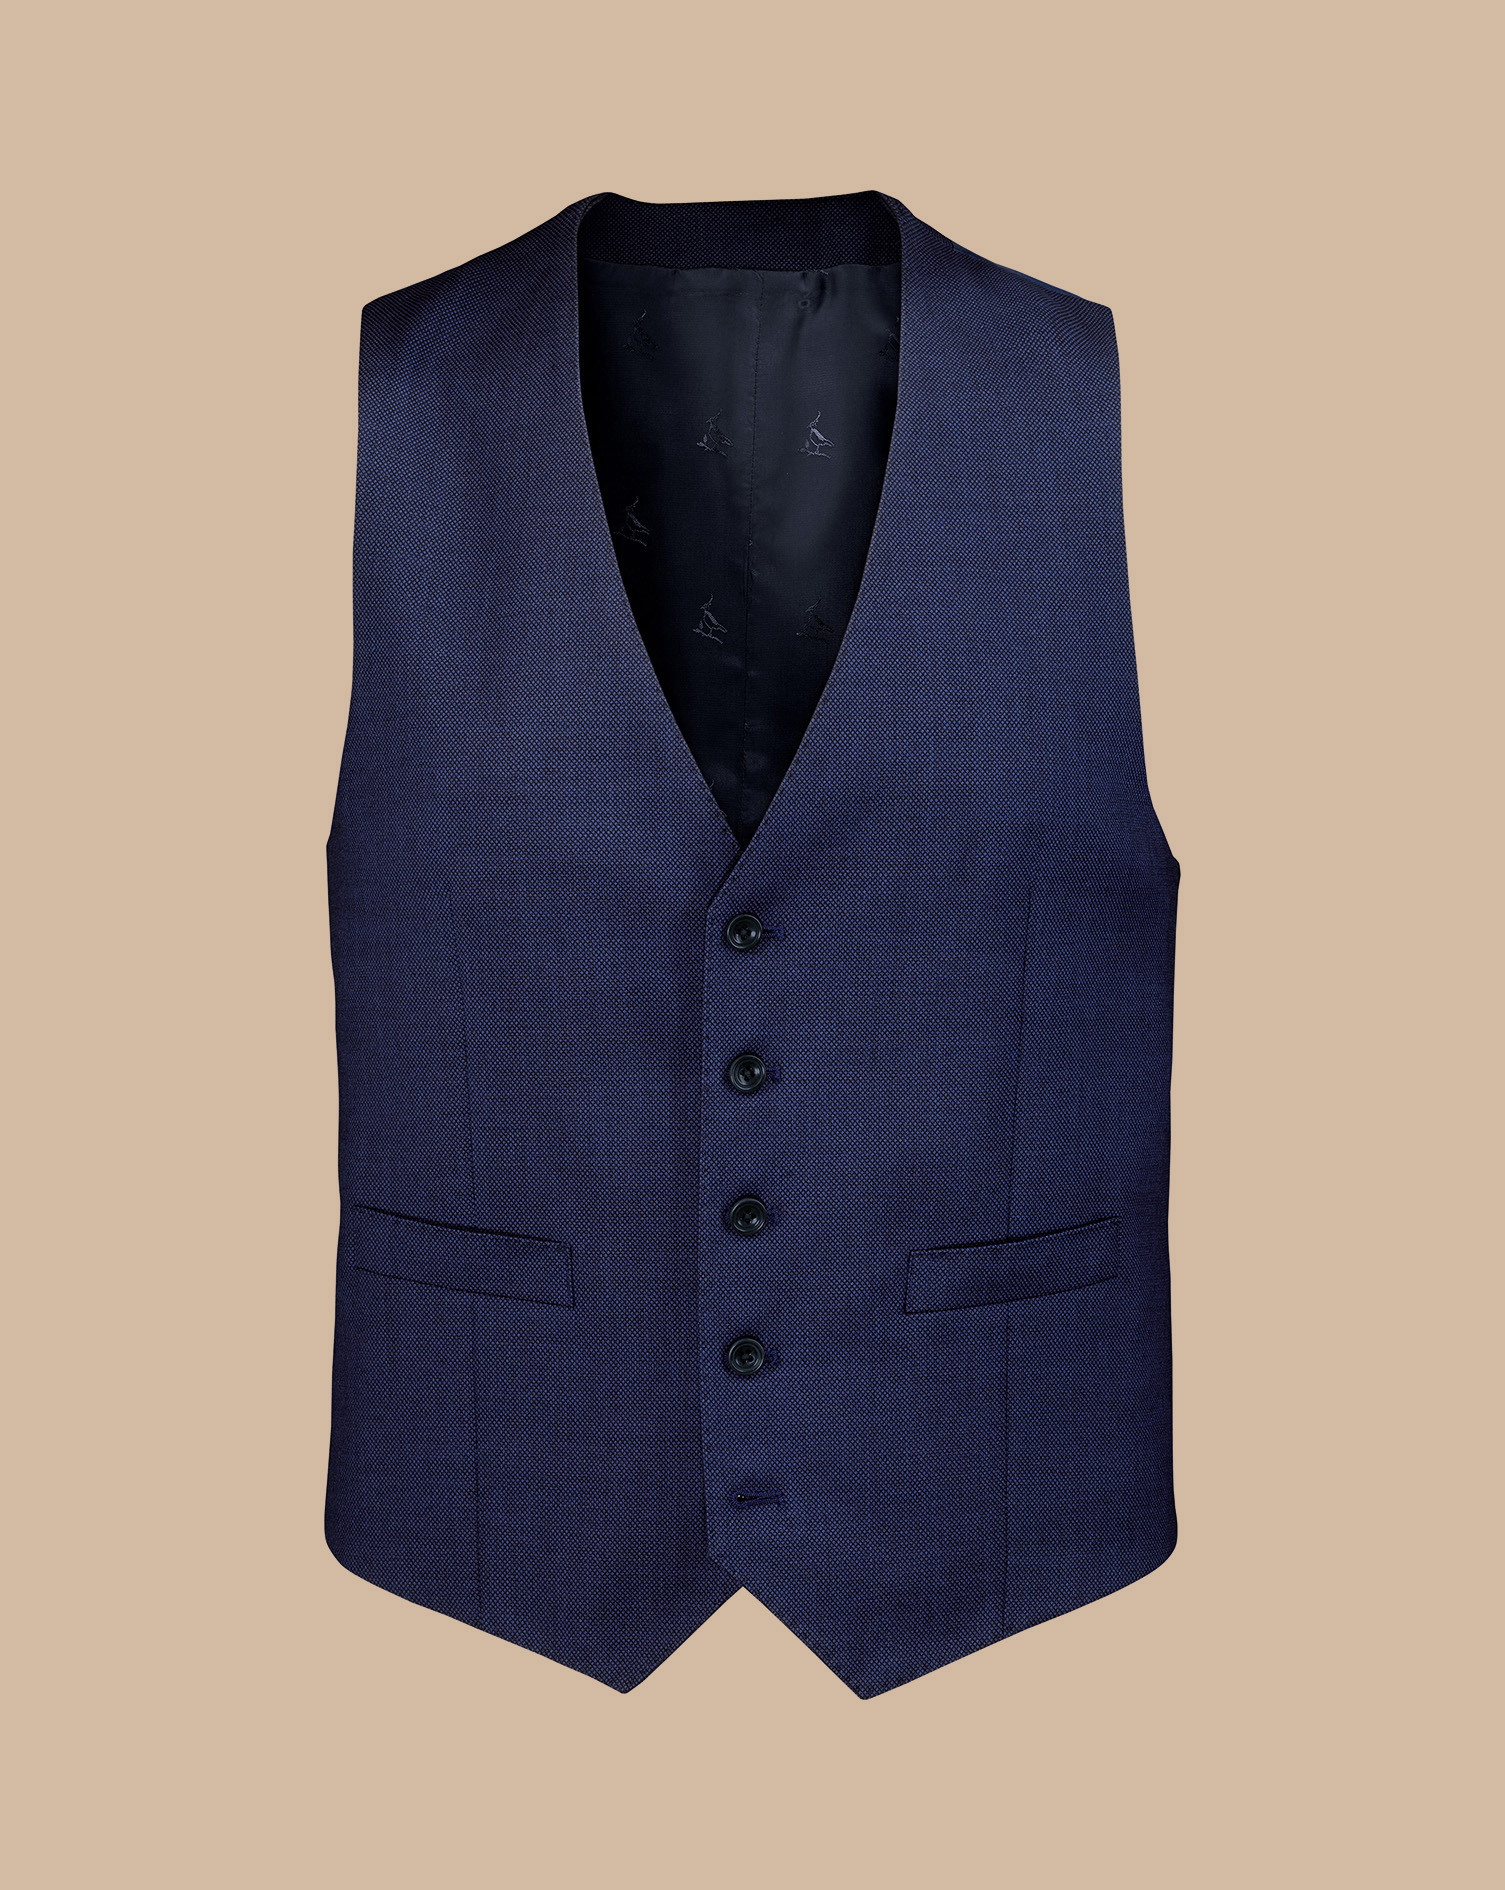 Men's Charles Tyrwhitt Ultimate Performance Birdseye Suit Waistcoat - Indigo Blue Size w44 Wool
